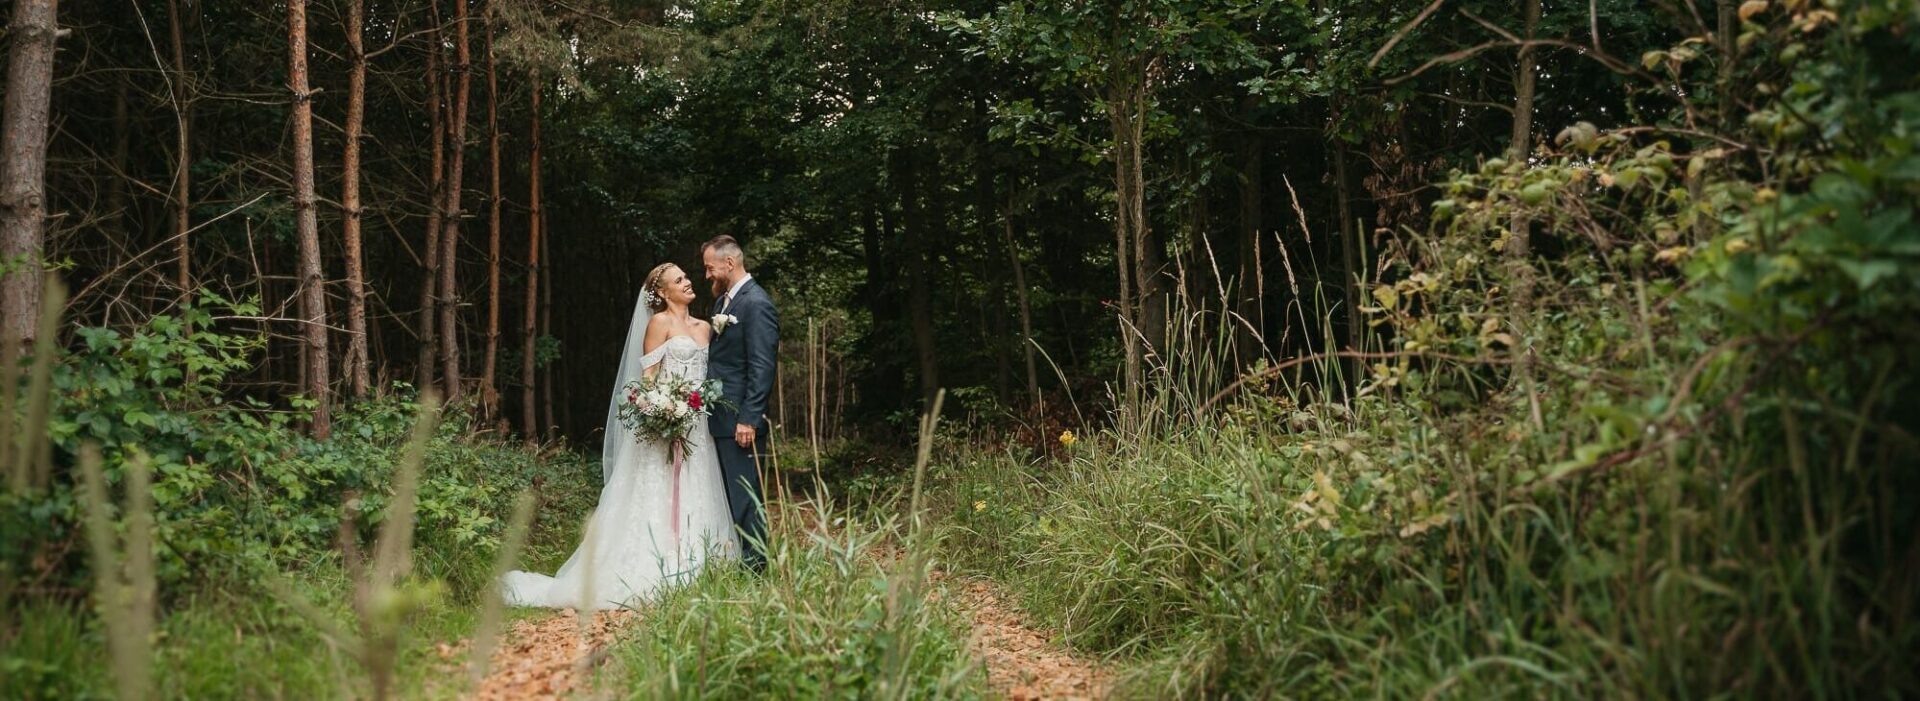 svatba pivovar chric wedding forest